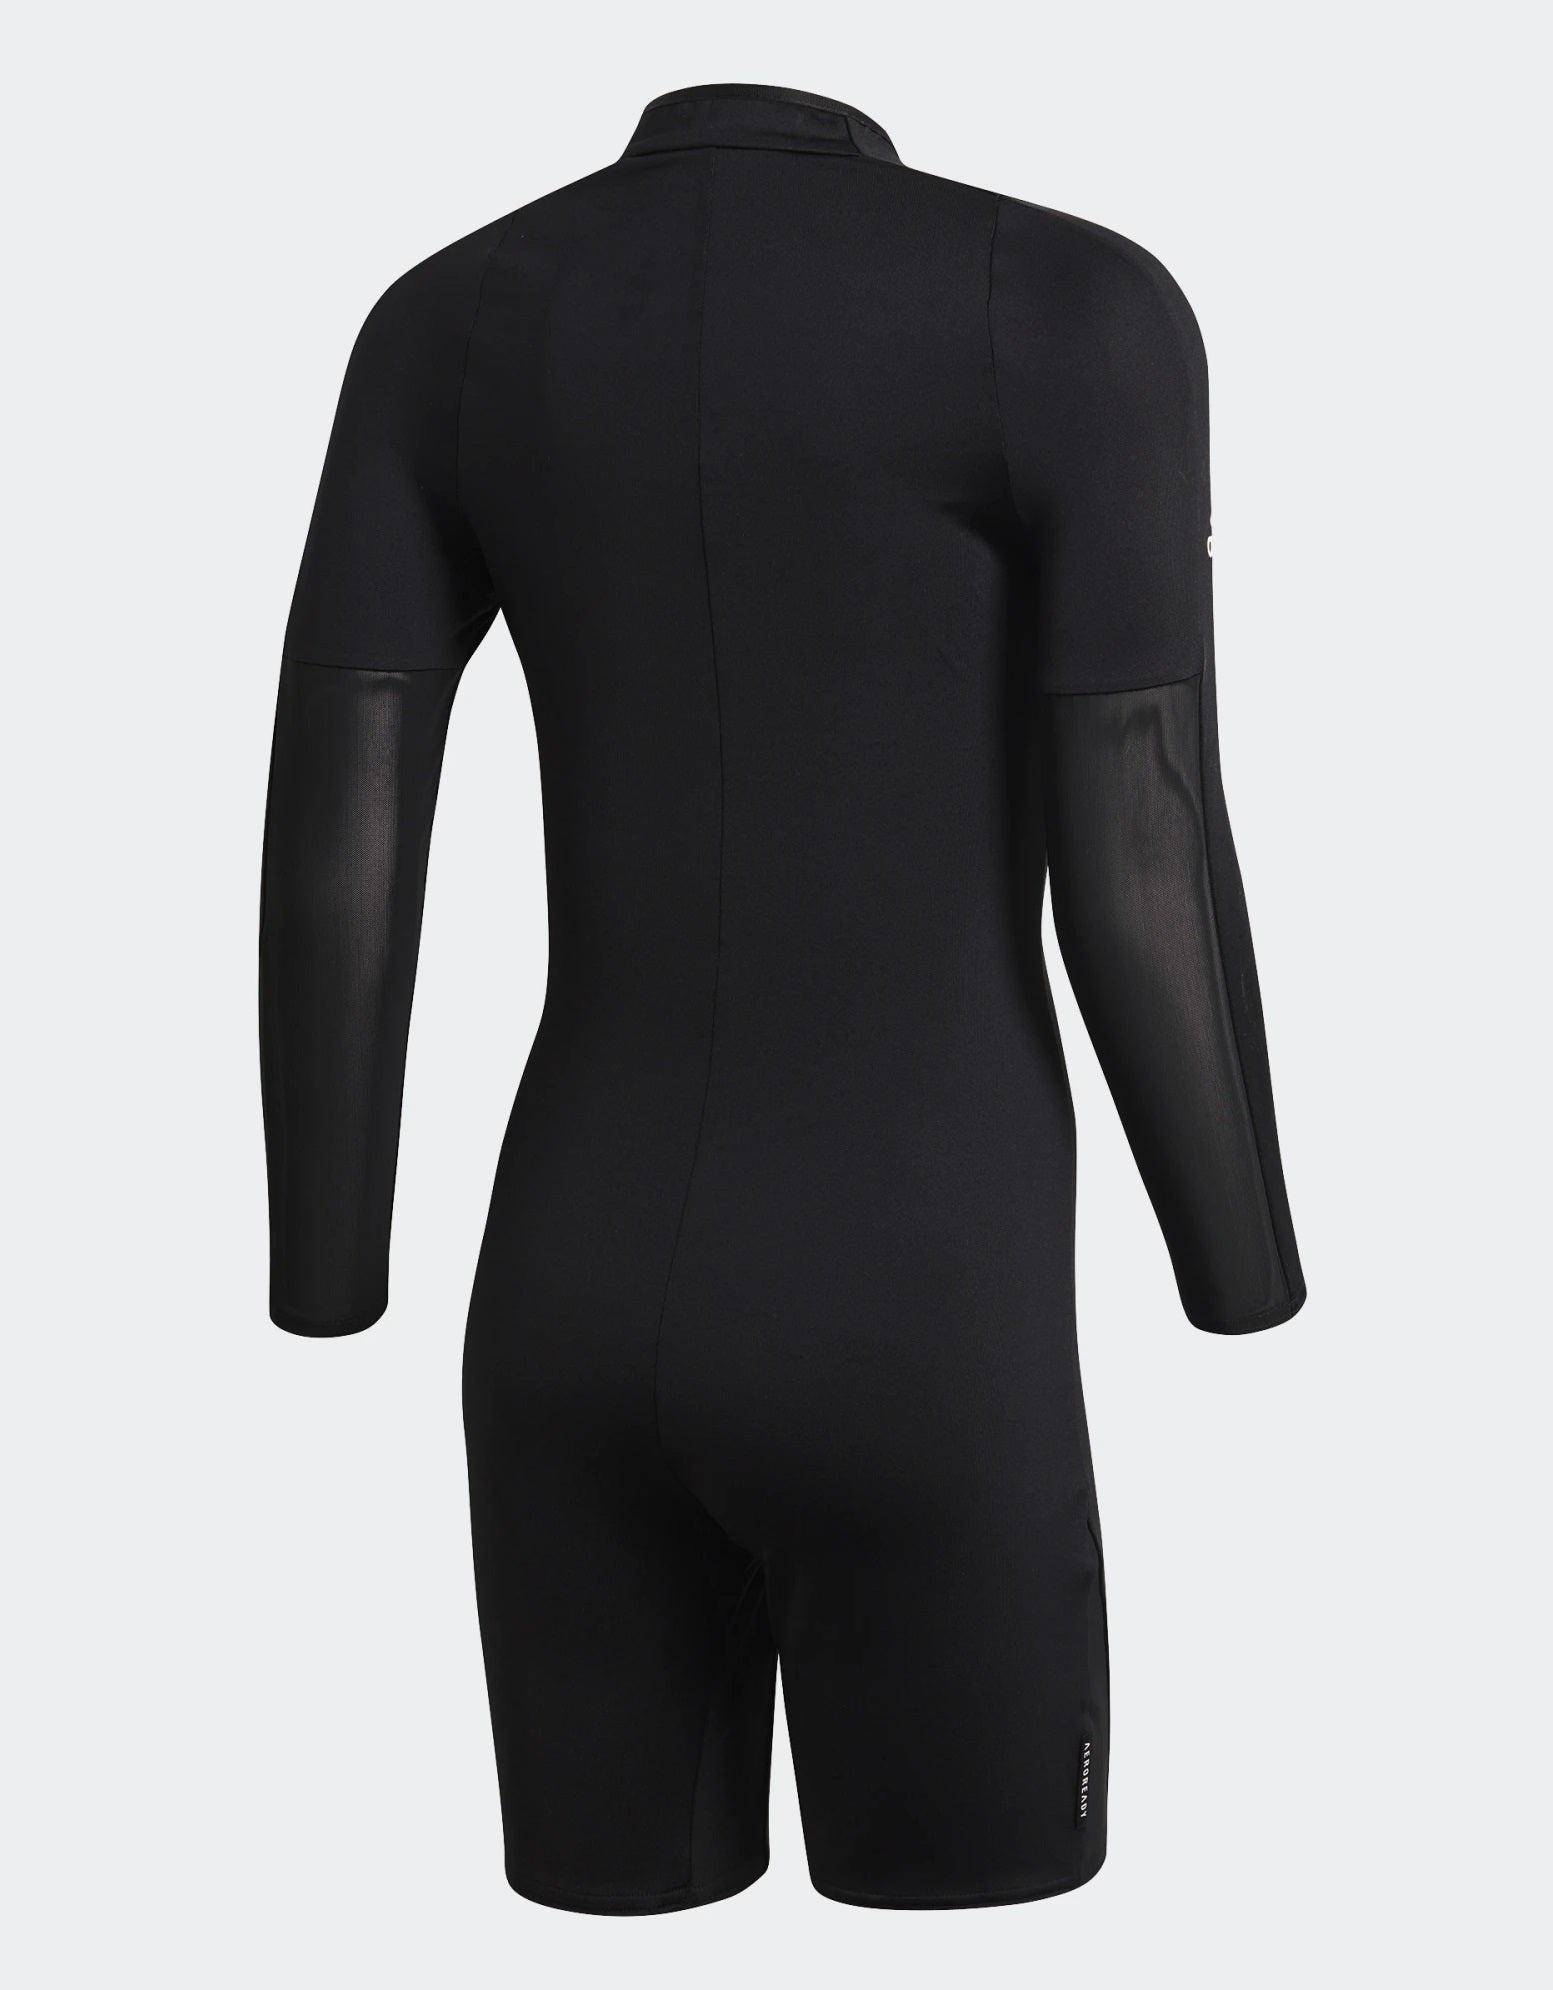 AEROREADY – Mann Suit Outlet Speed FS2394 Sports Z.N.E. Adidas